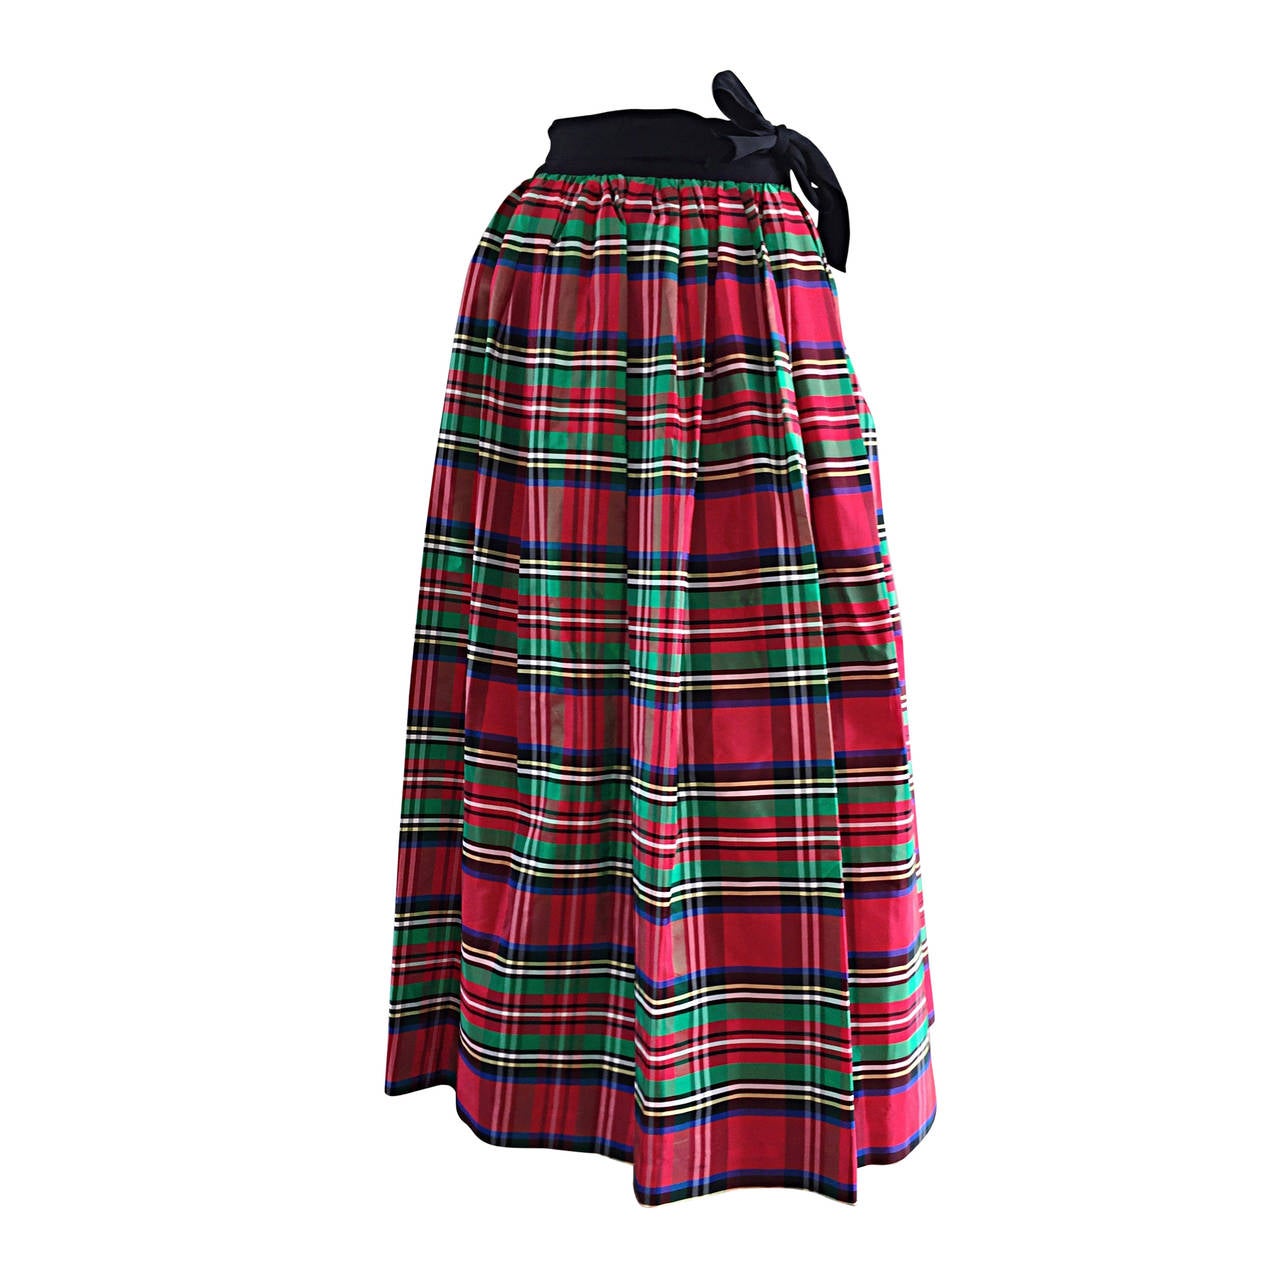 Rare Very Early Vintage Ellen Tracy for Bonwit Teller Silk Taffeta Plaid Skirt